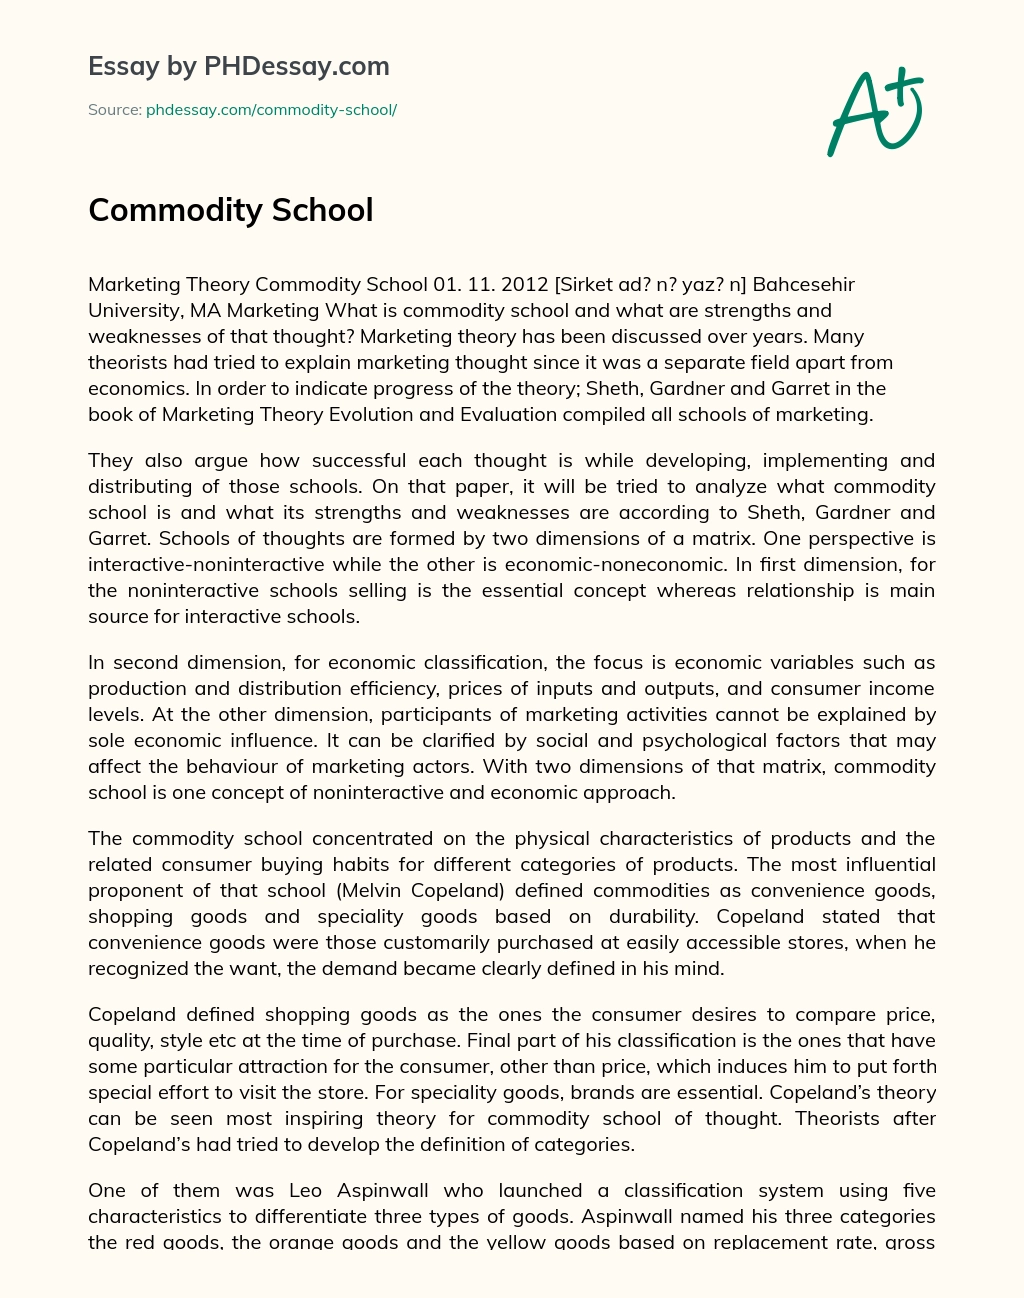 Commodity School essay